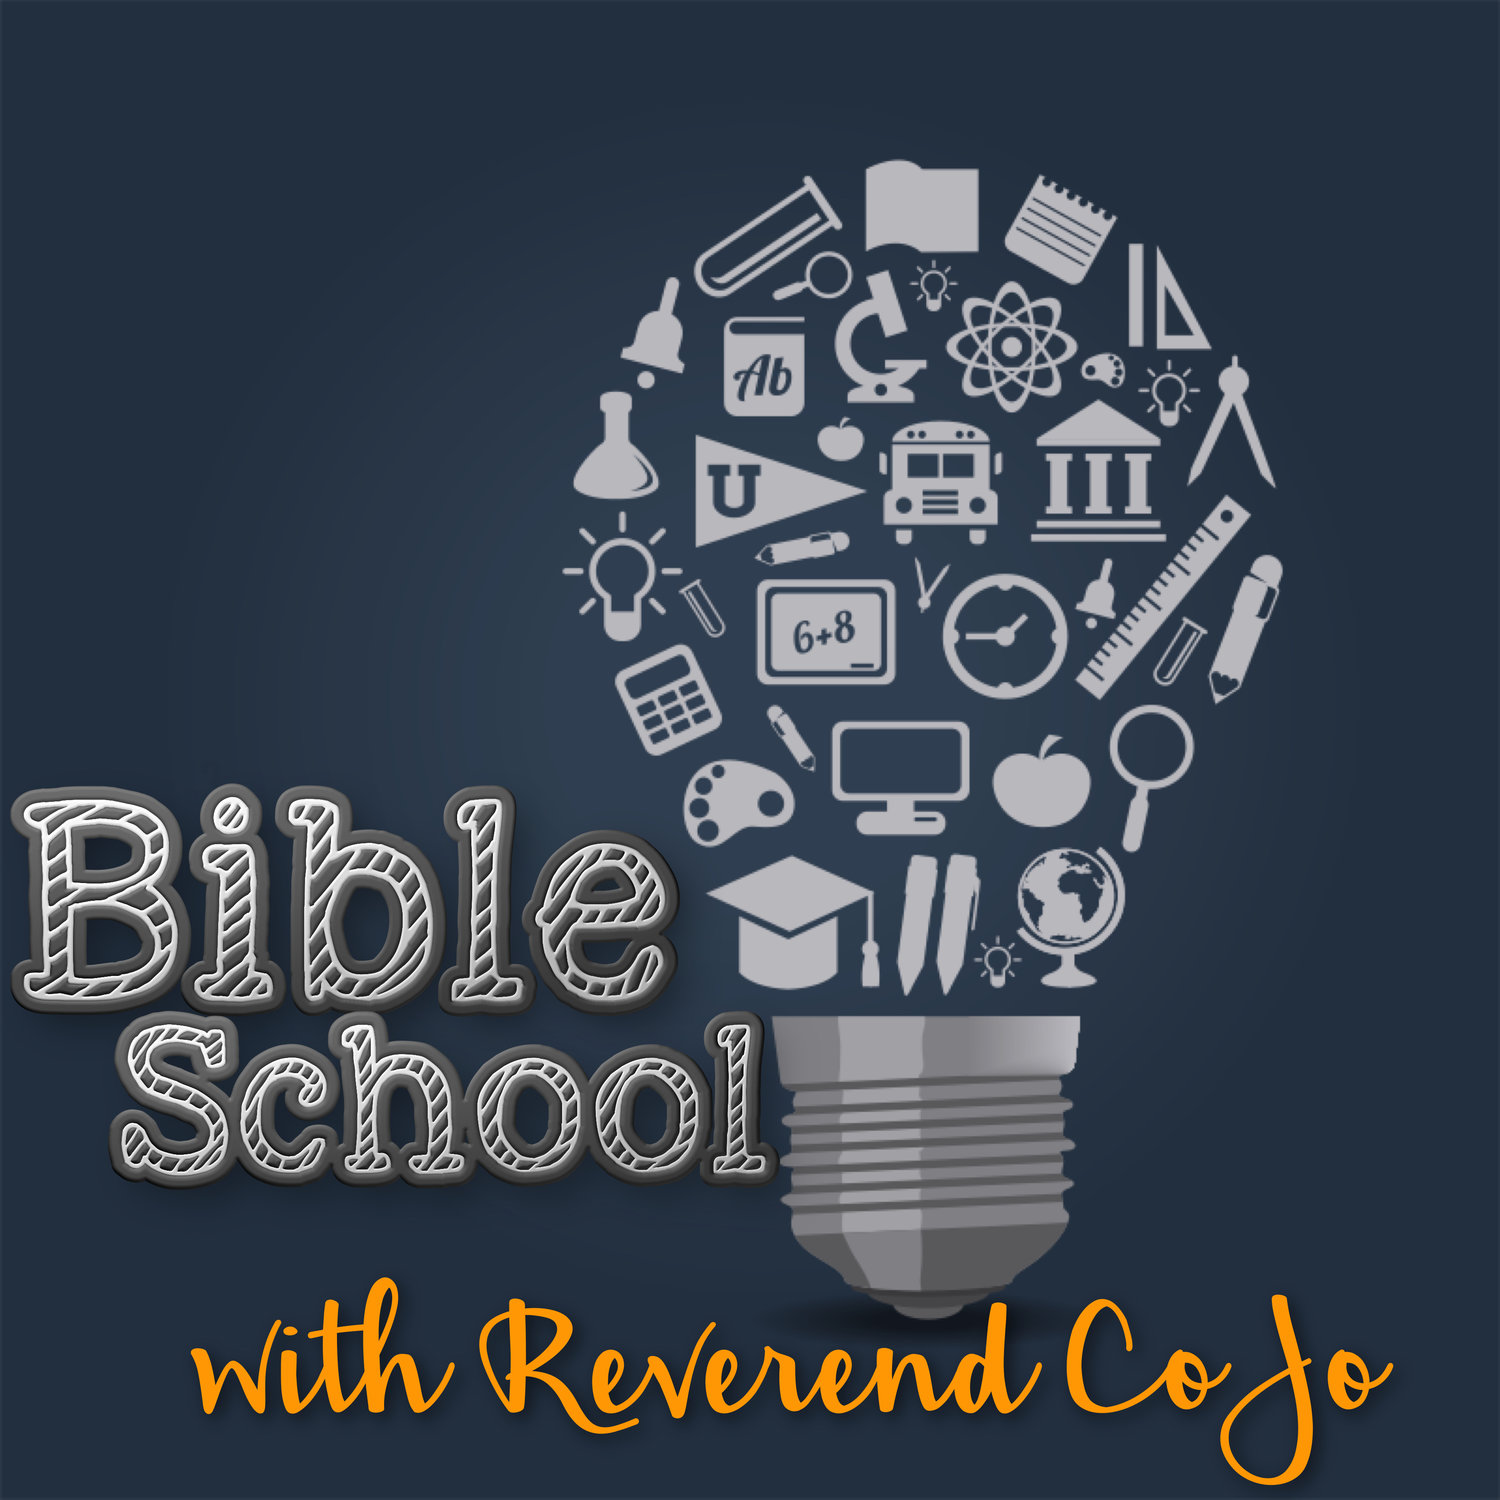 Bible School with Reverend CoJo